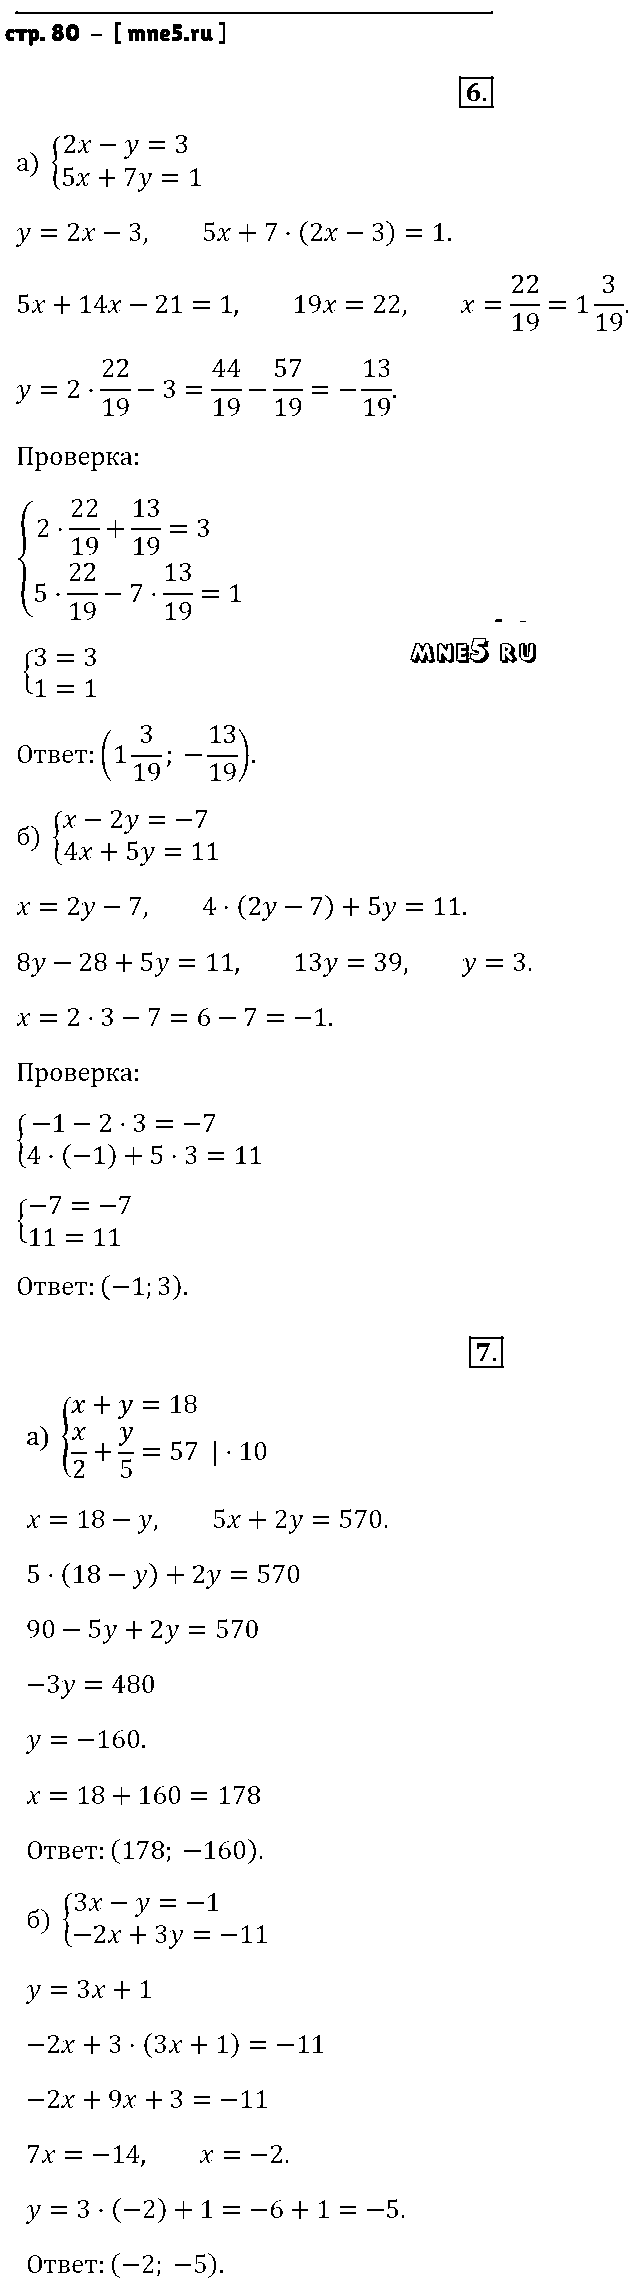 ГДЗ Алгебра 7 класс - стр. 80